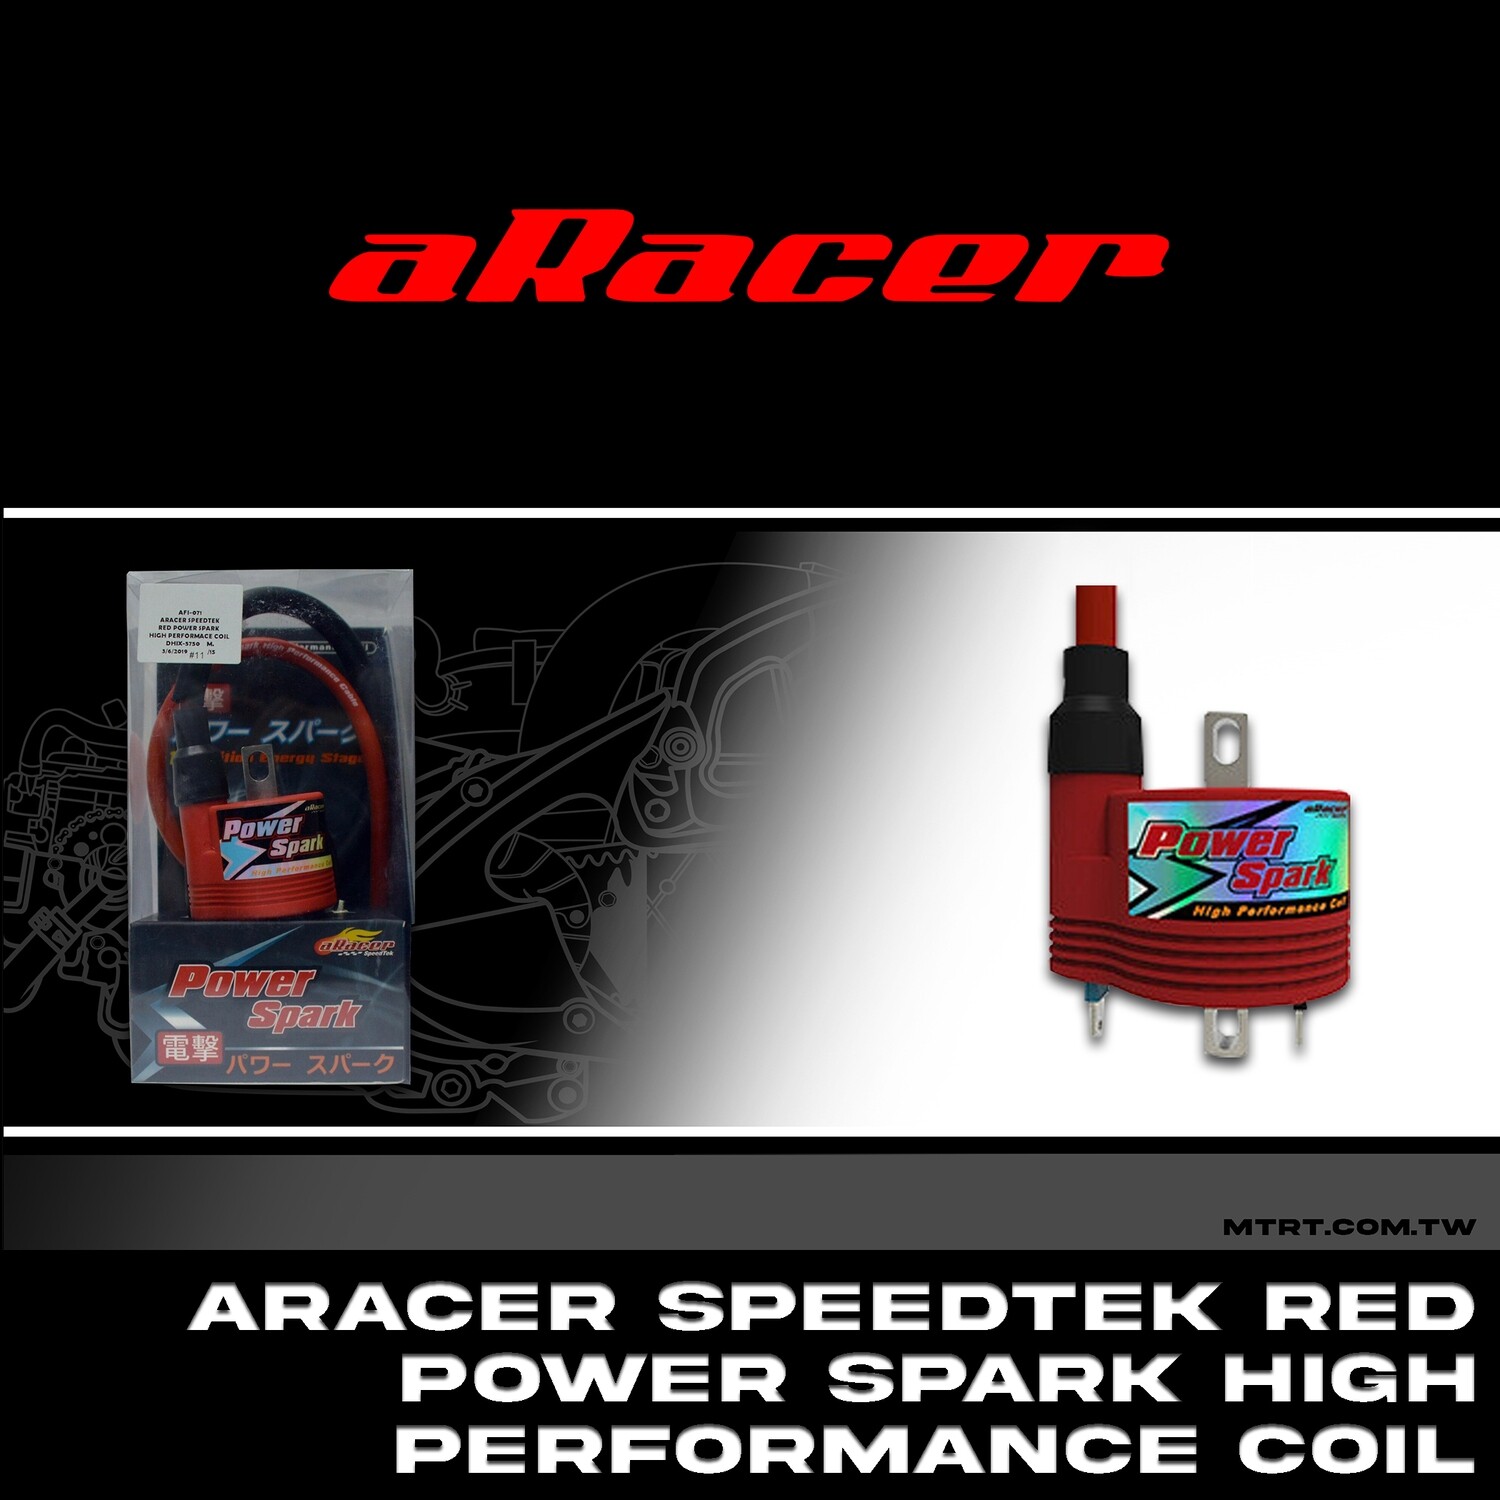 ARACER SPEEDTEK RED POWER SPARK HIGH PERFORMANCE COIL DHIX-5750